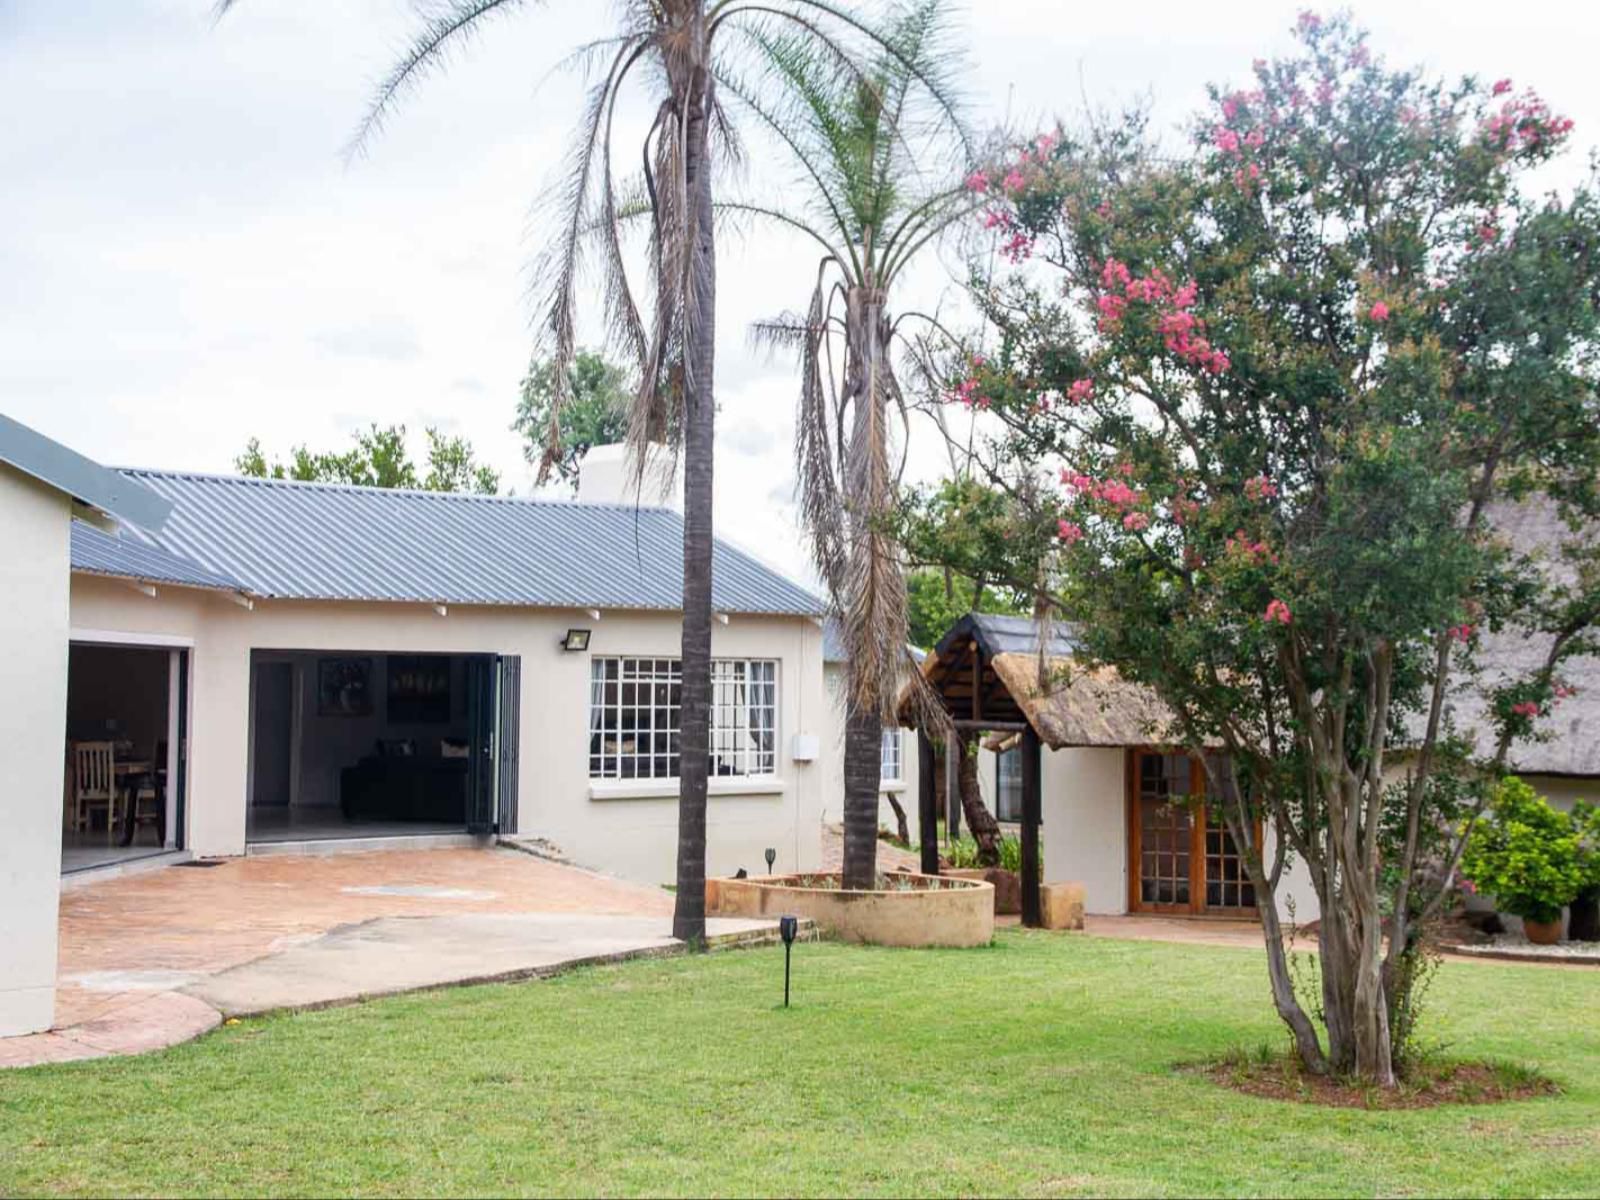 N Kosi Sana Game Lodge Kwamhlanga Mpumalanga South Africa House, Building, Architecture, Palm Tree, Plant, Nature, Wood